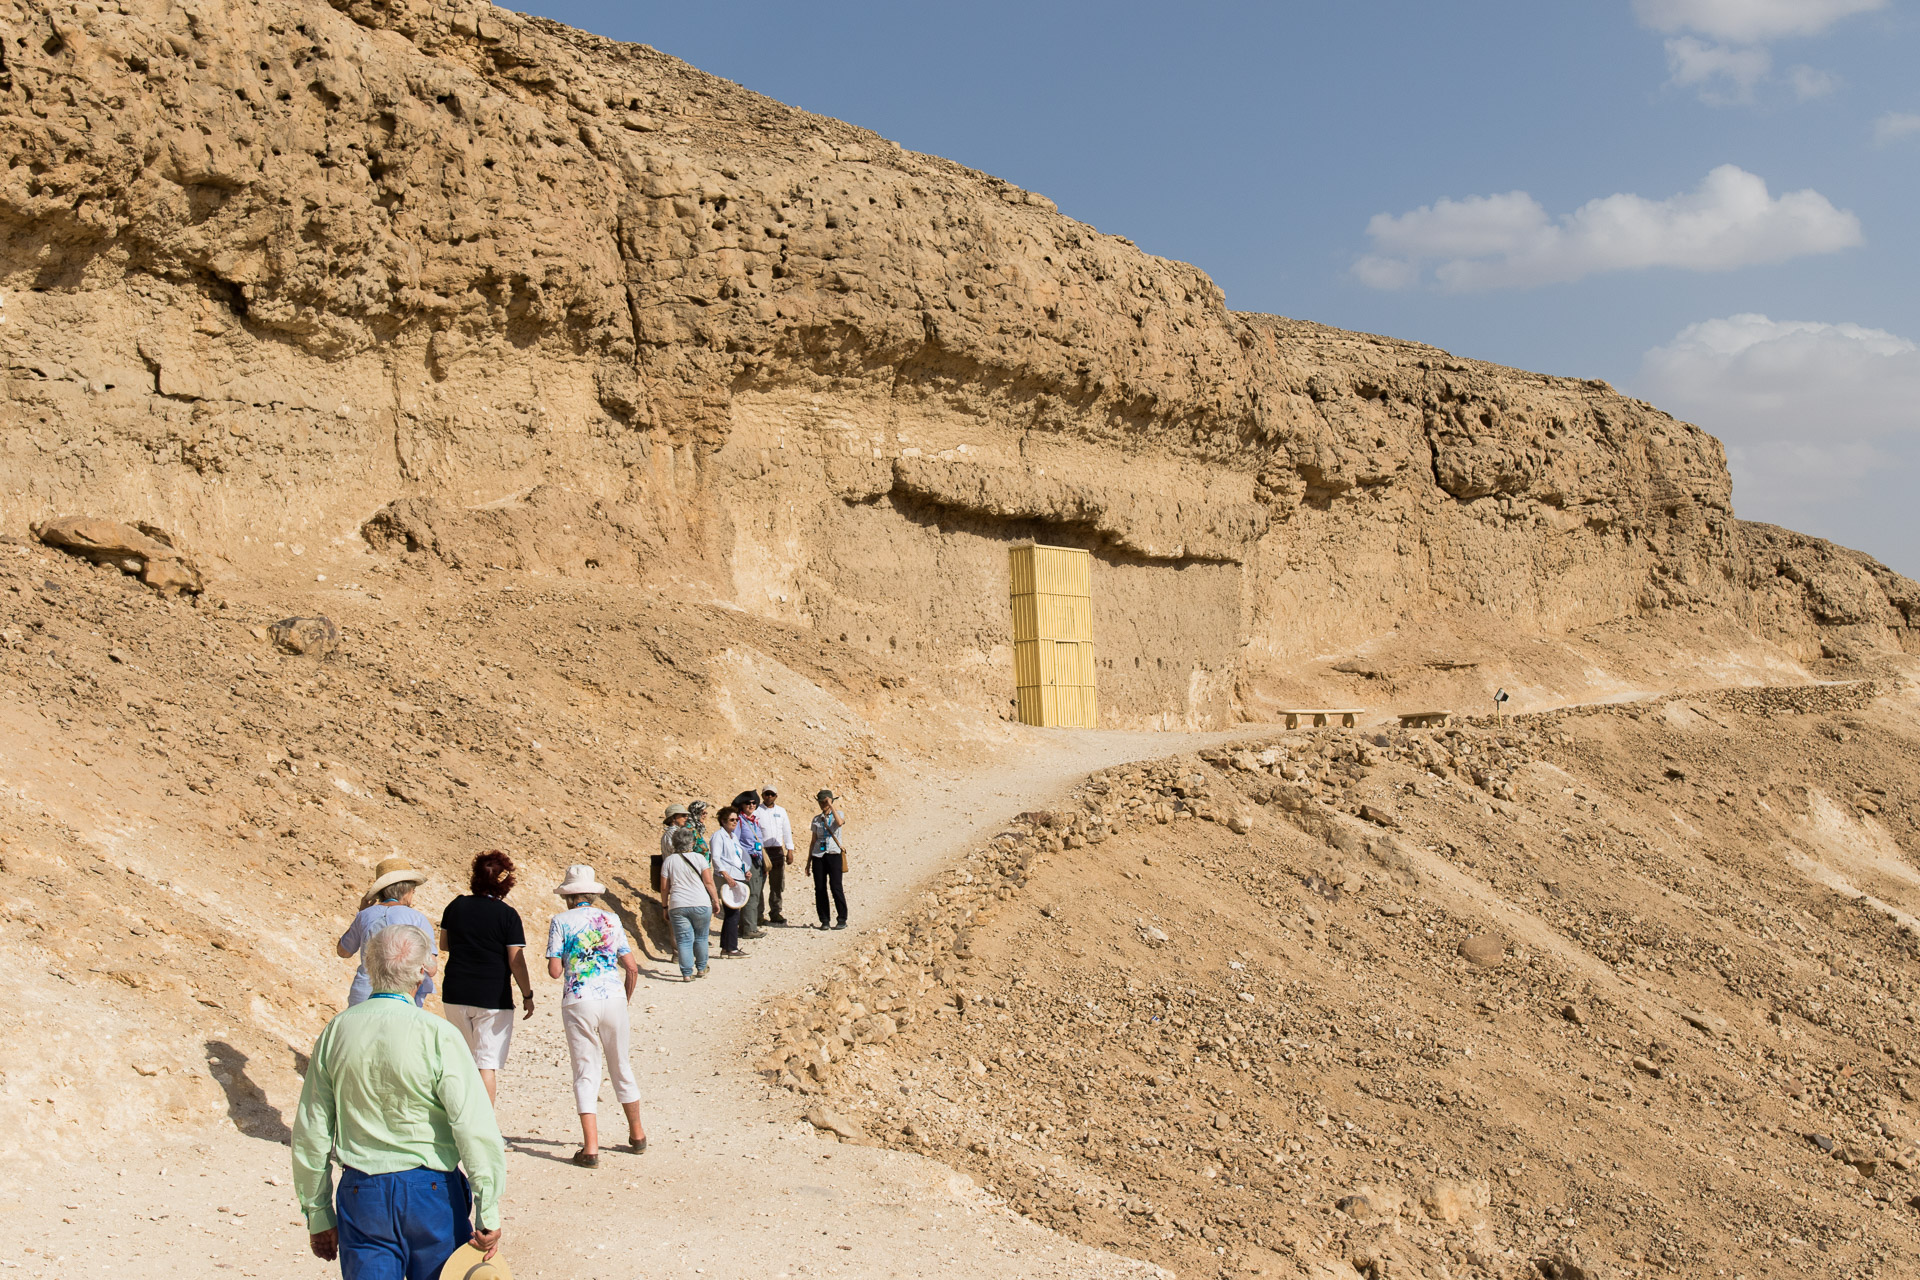 Day 2: Explore the Temple of Queen Hatshepsut